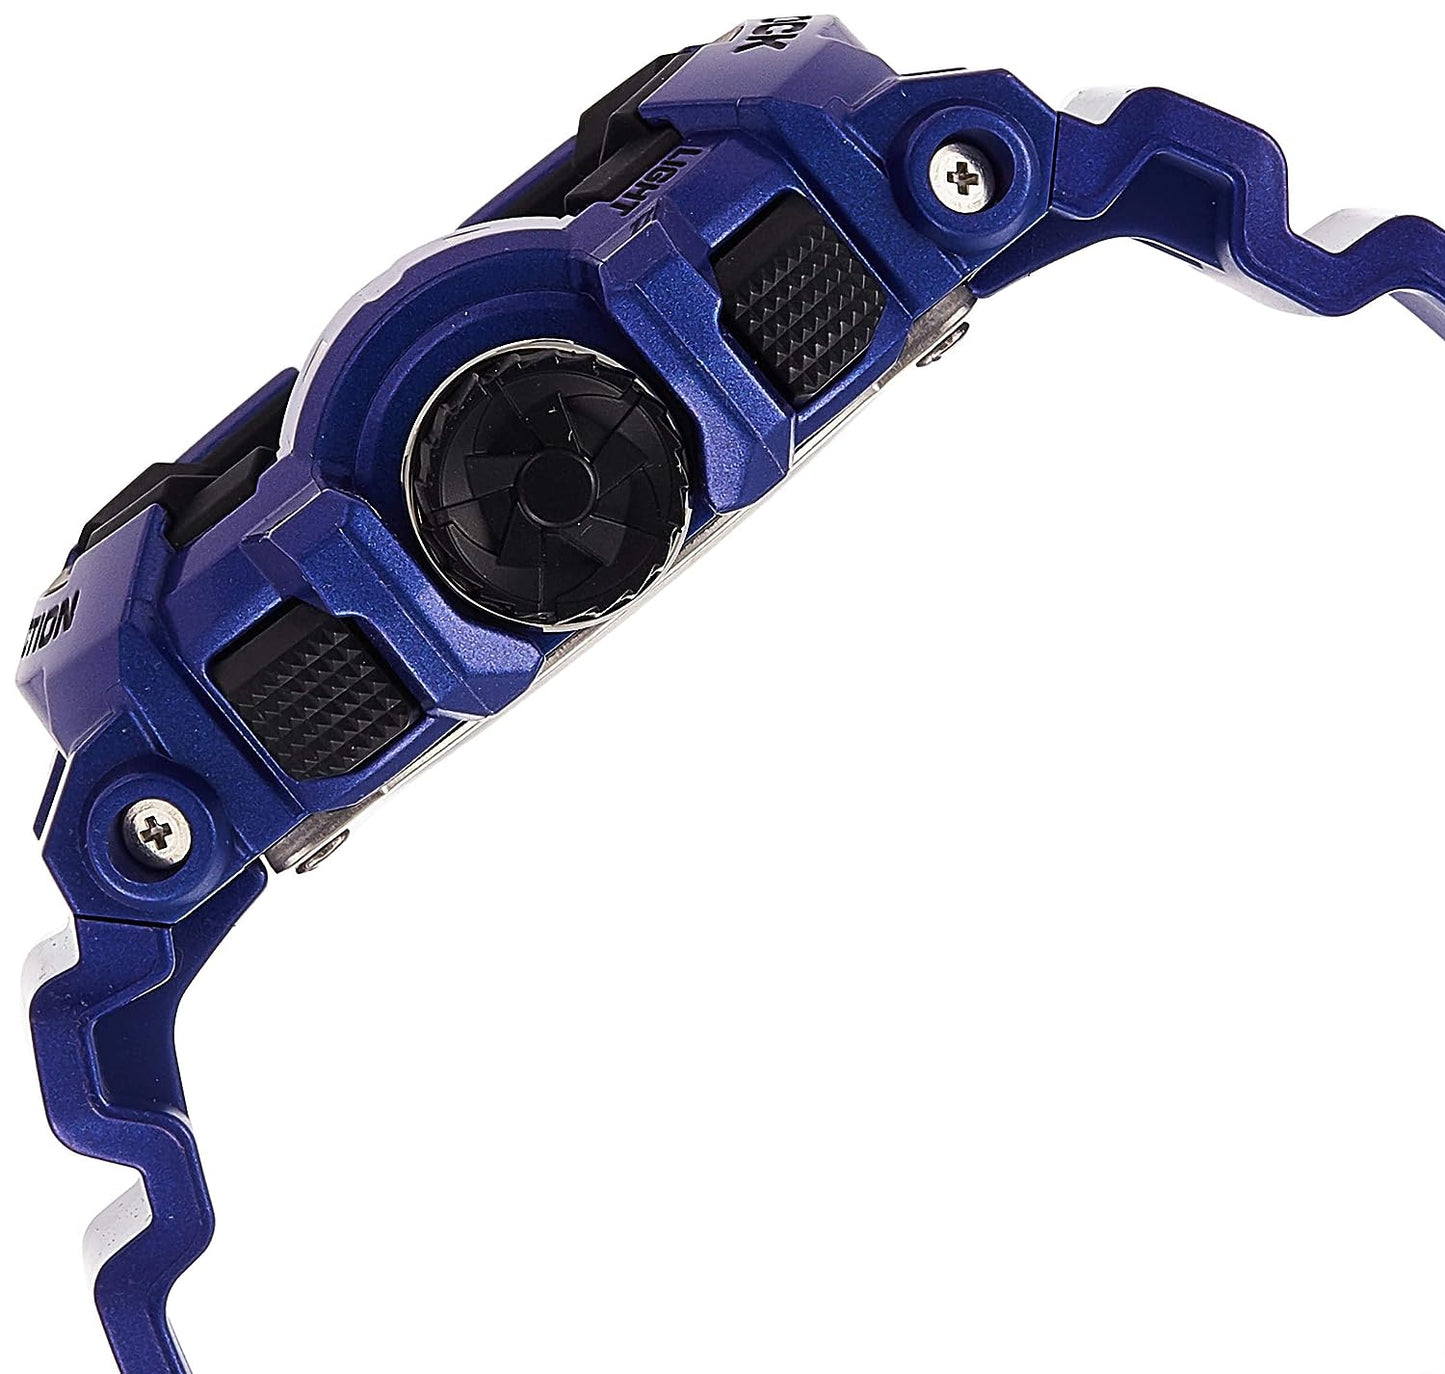 Casio G-Shock Athleisure Analog-Digital Blue Dial Men's Watch - GBA-400-2ADR(G558)